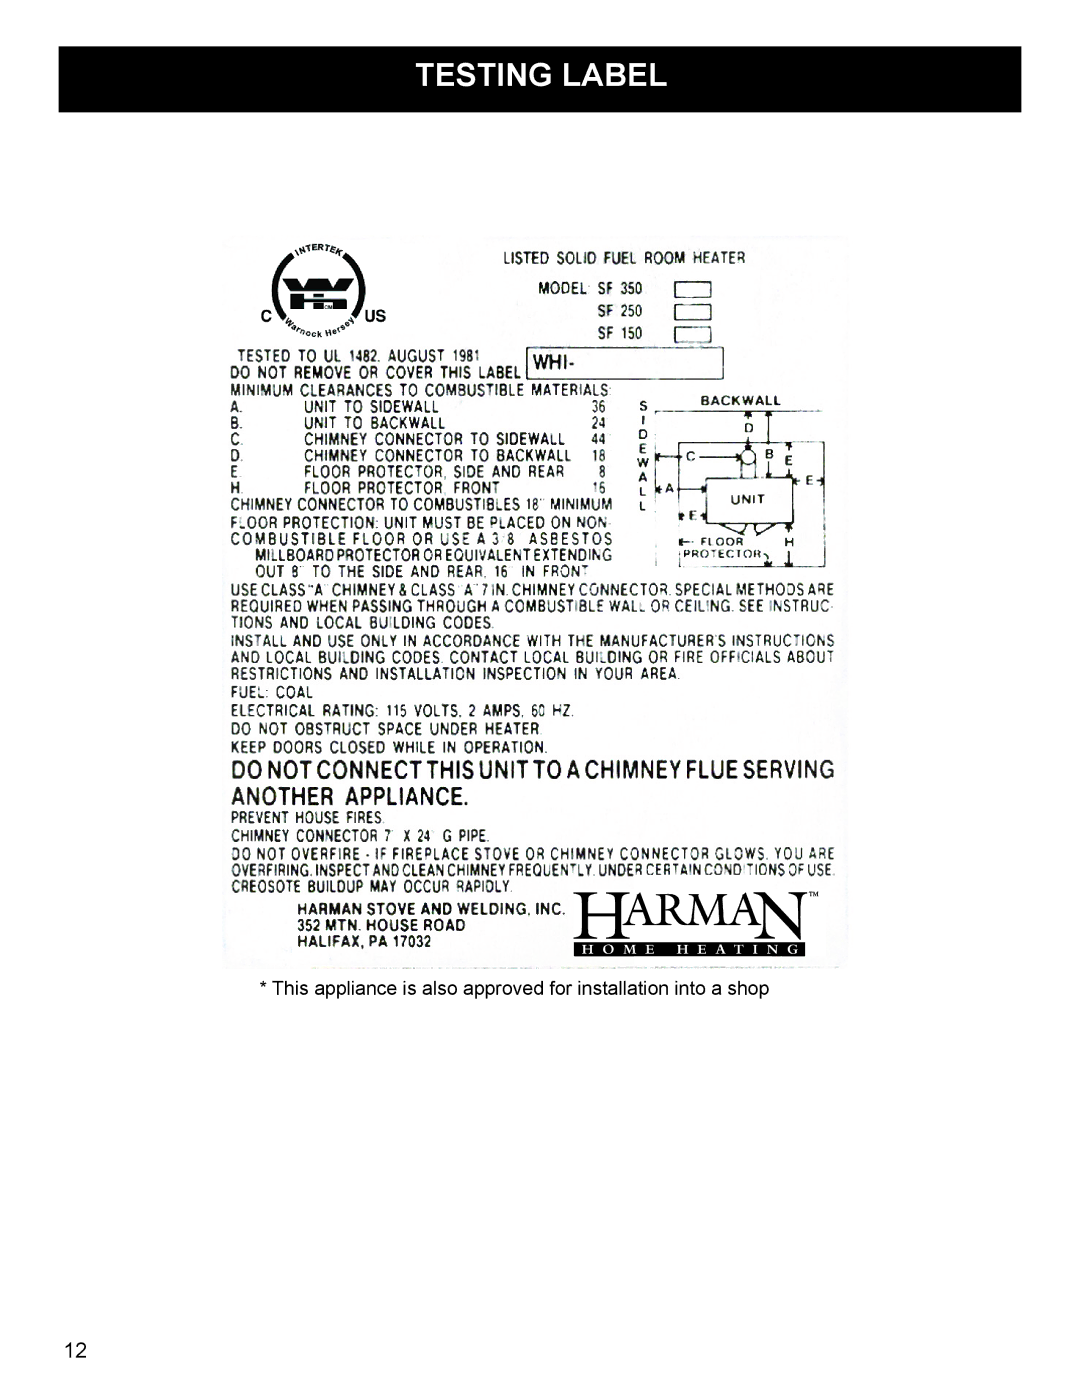 Harman Stove Company SF 250 manual Testing label 